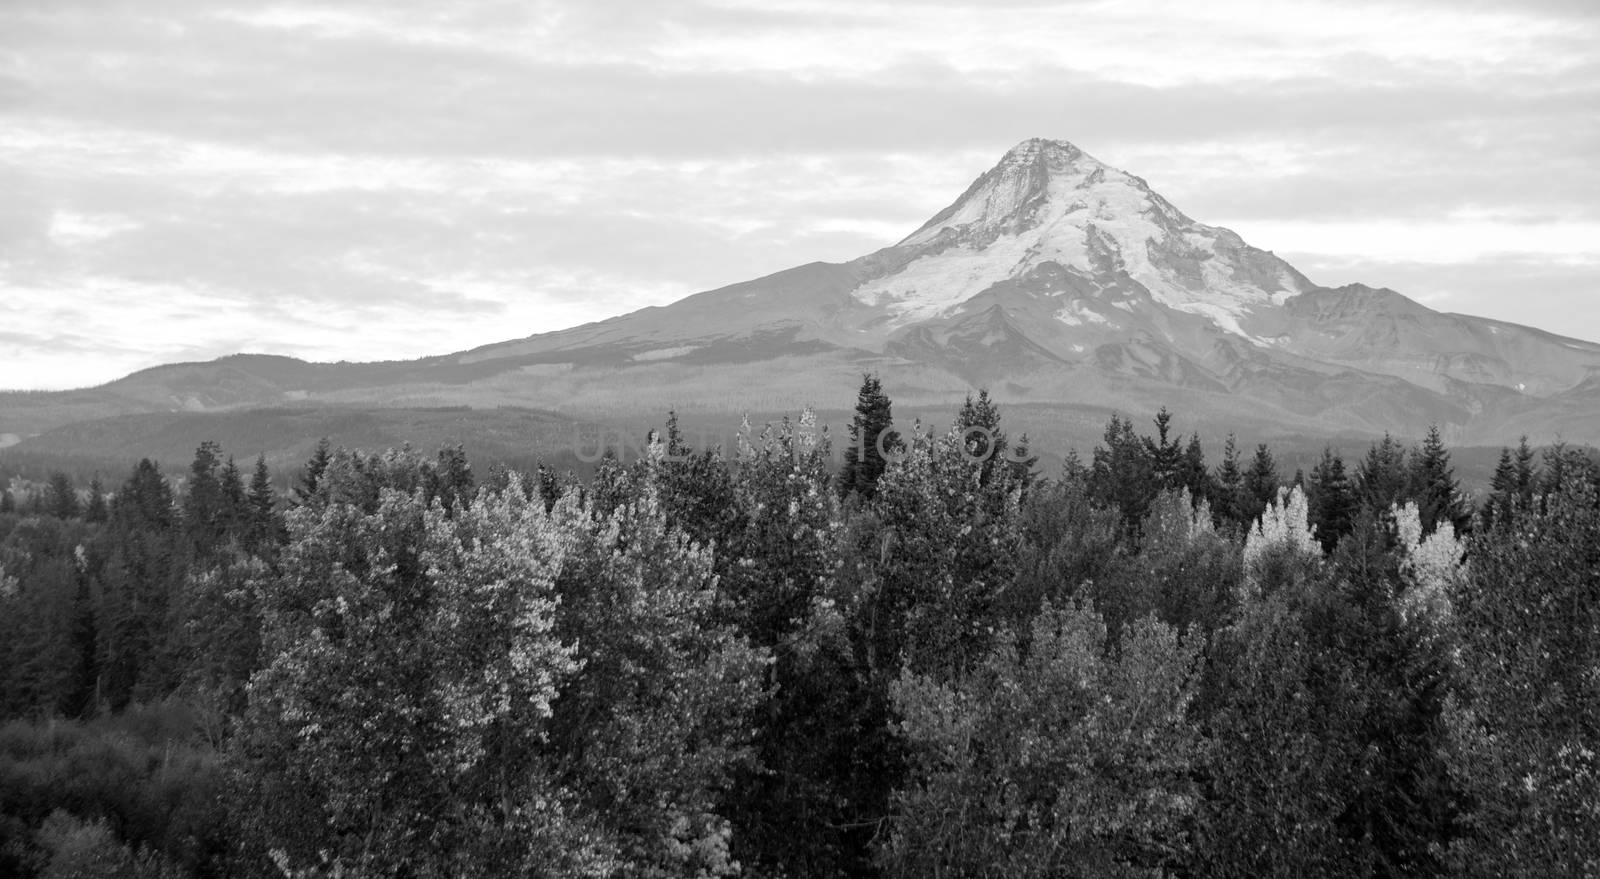 Mt. Hood Volcanic Mountain Cascade Range Oregon Territory by ChrisBoswell